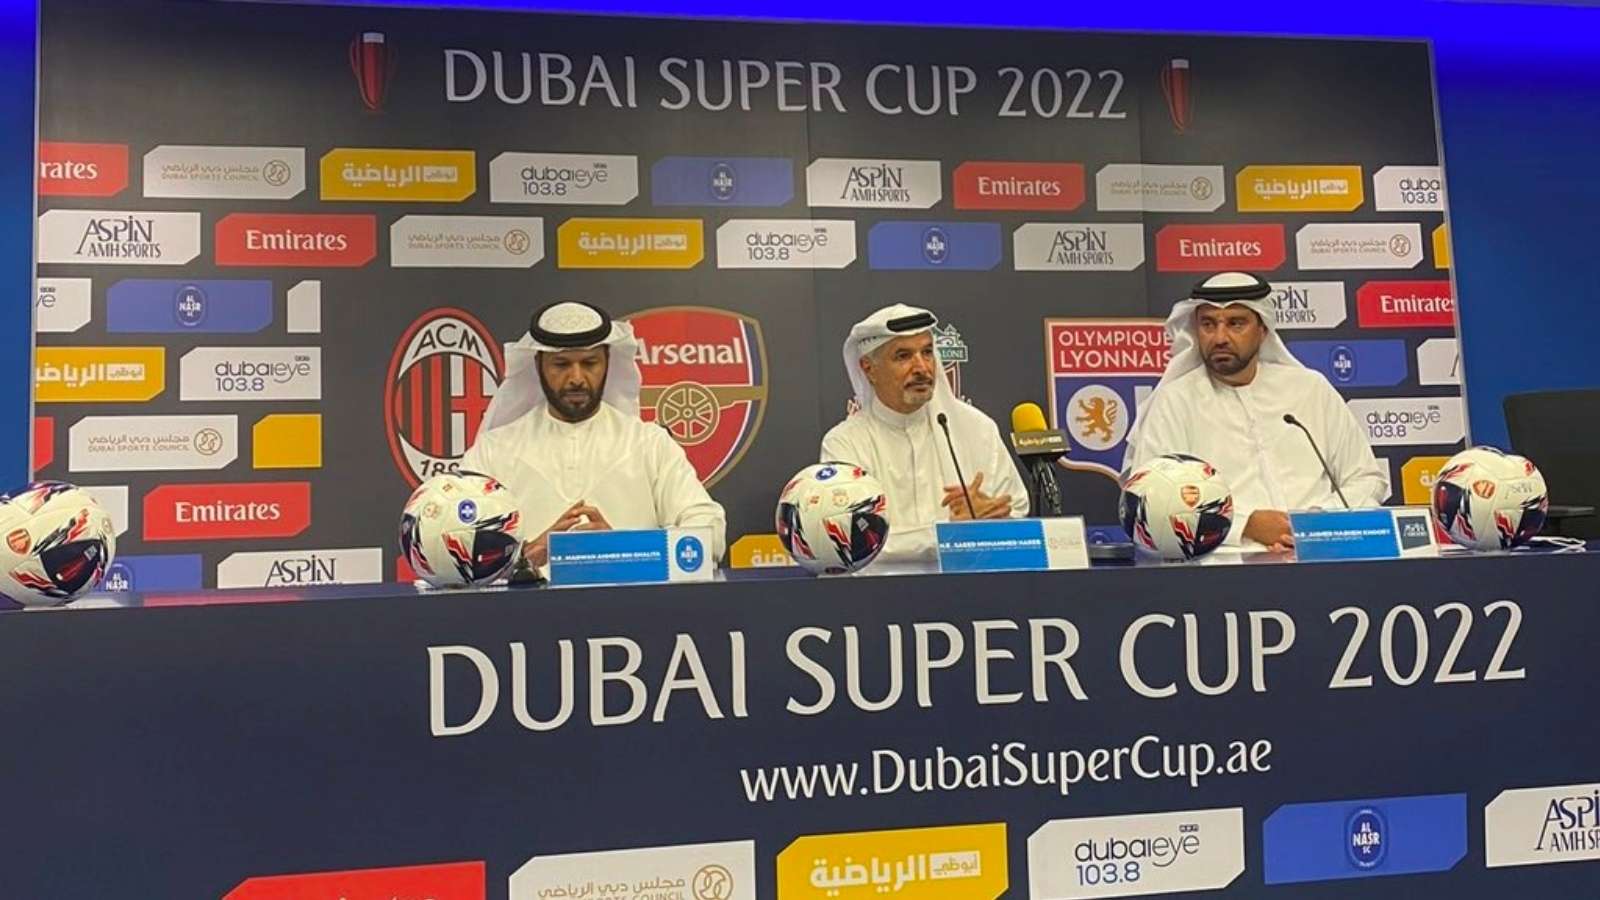 Dubai Super Cup 